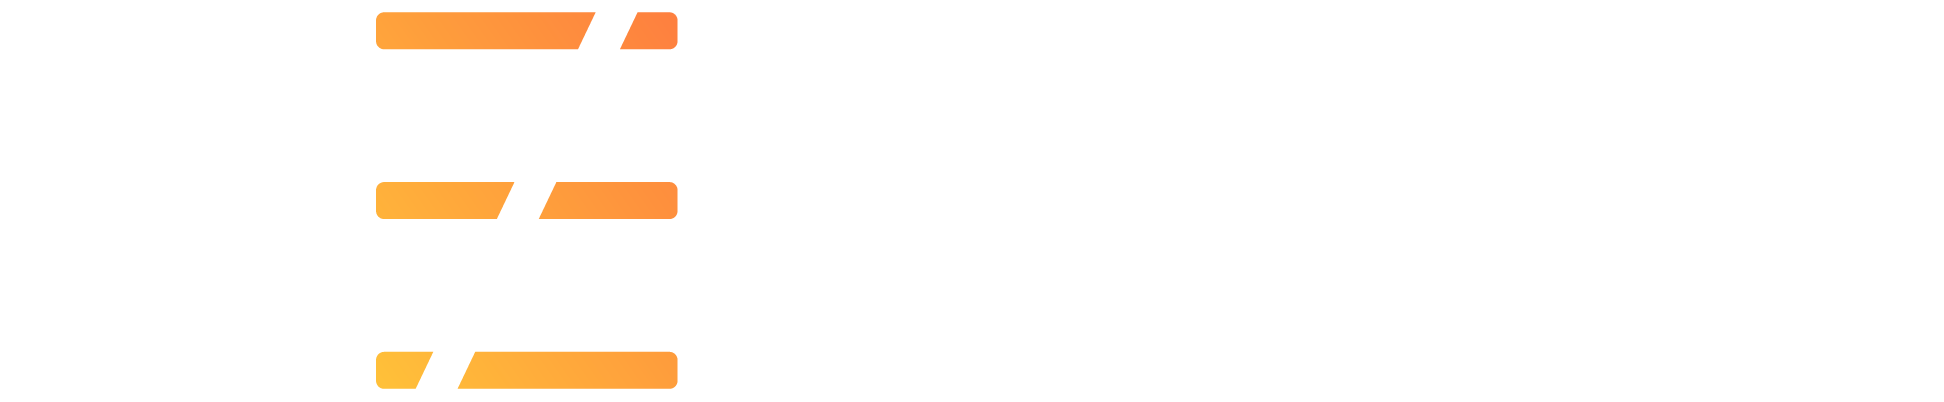 Revvo-Logo-1.png